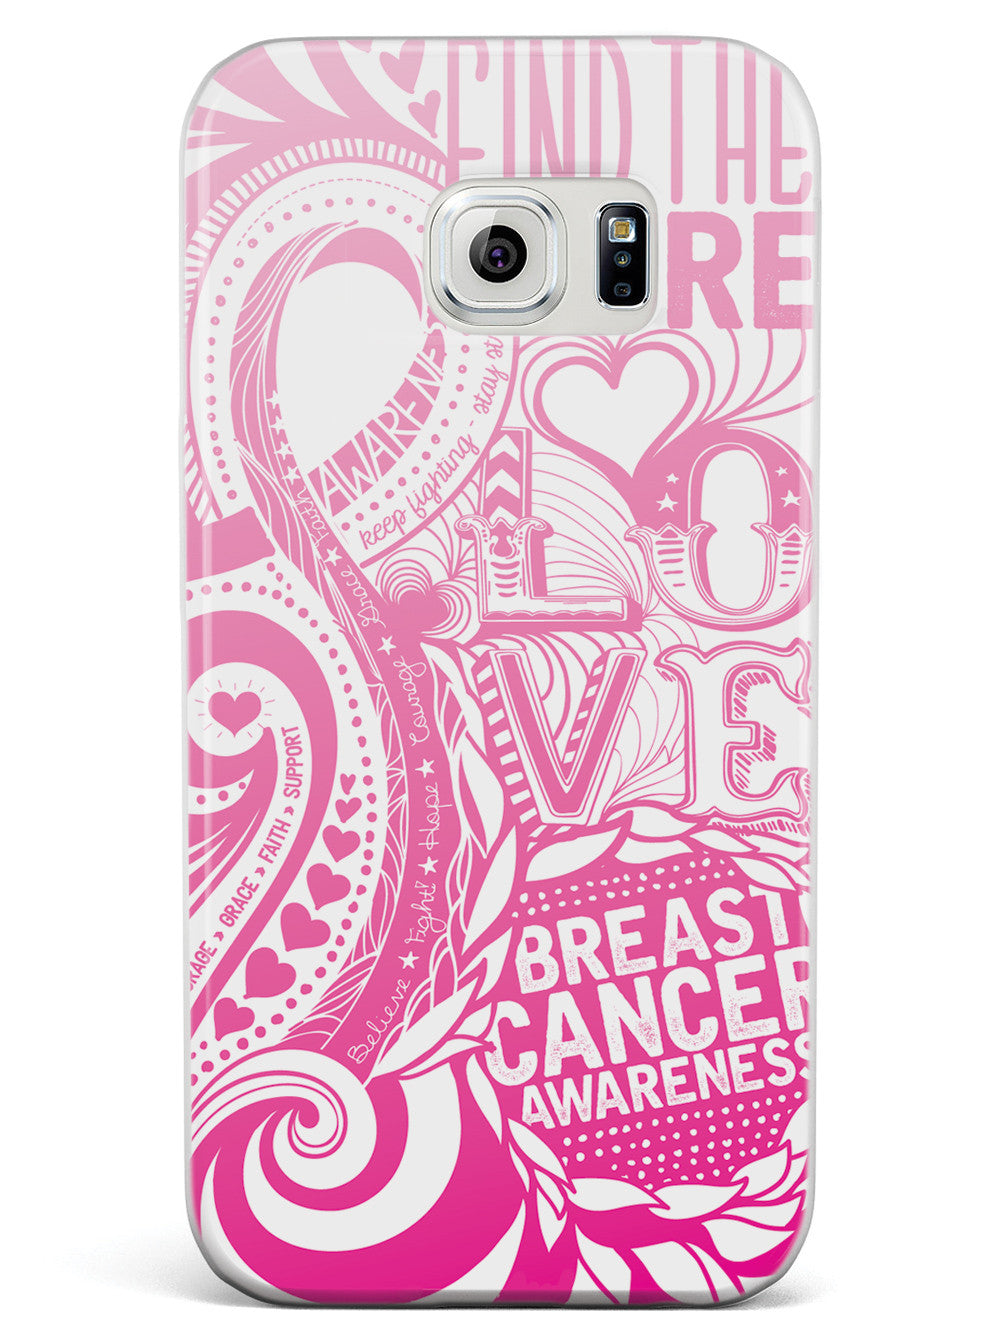 Breast Cancer Awareness - Zentangle Design Case